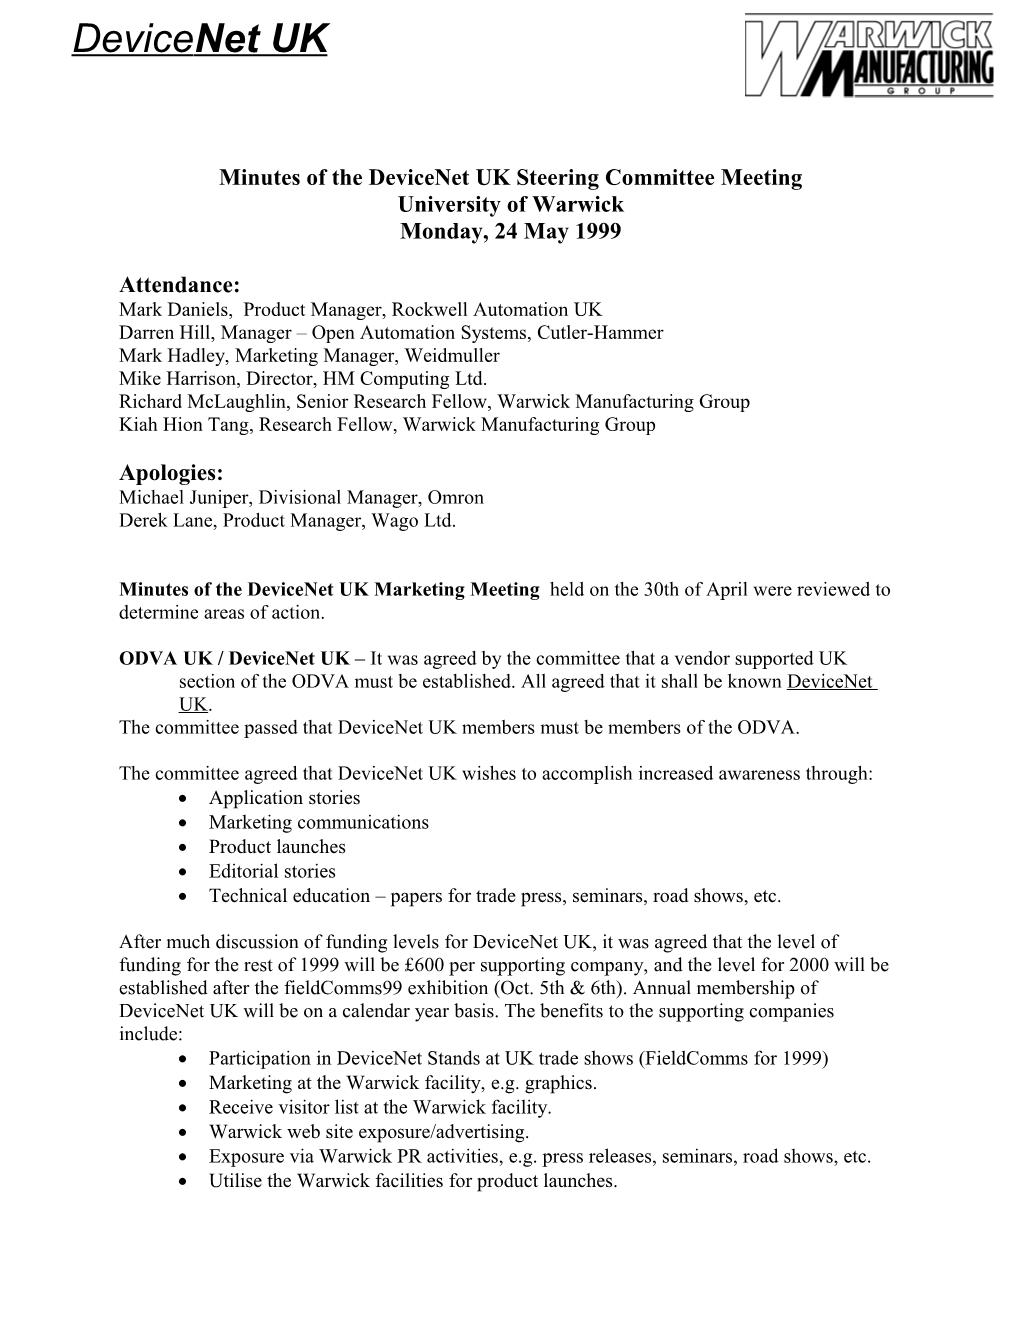 Minutes of the Devicenet UK Steering Committee Meeting